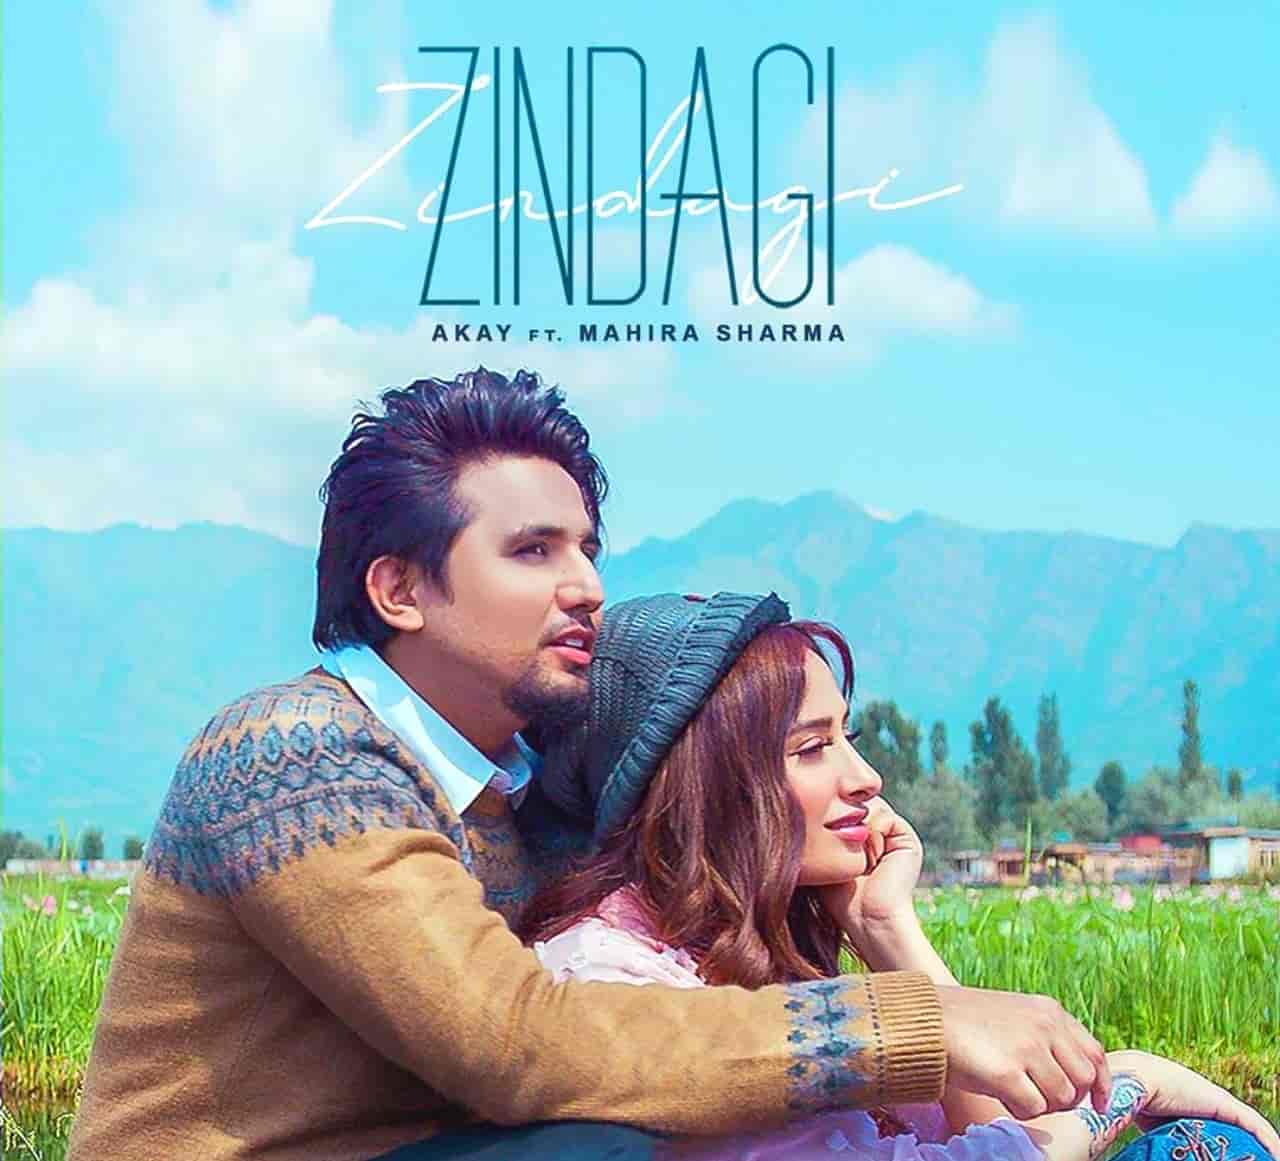 Zindagi Punjabi Song Image Features Mahira Sharma Sung By A Kay